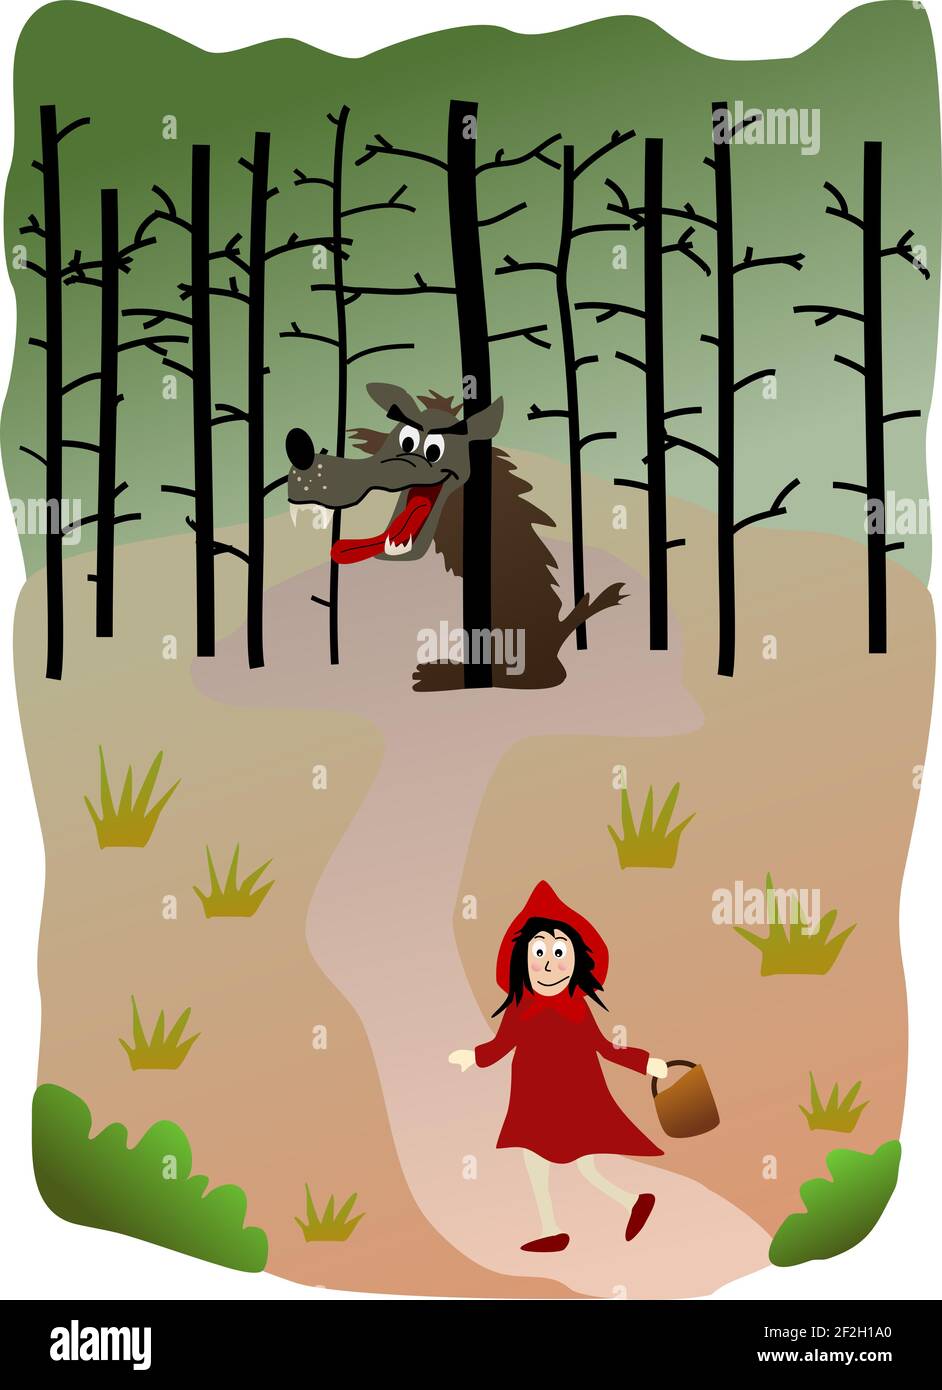 Little Red Riding Hood illustration Photo Stock - Alamy